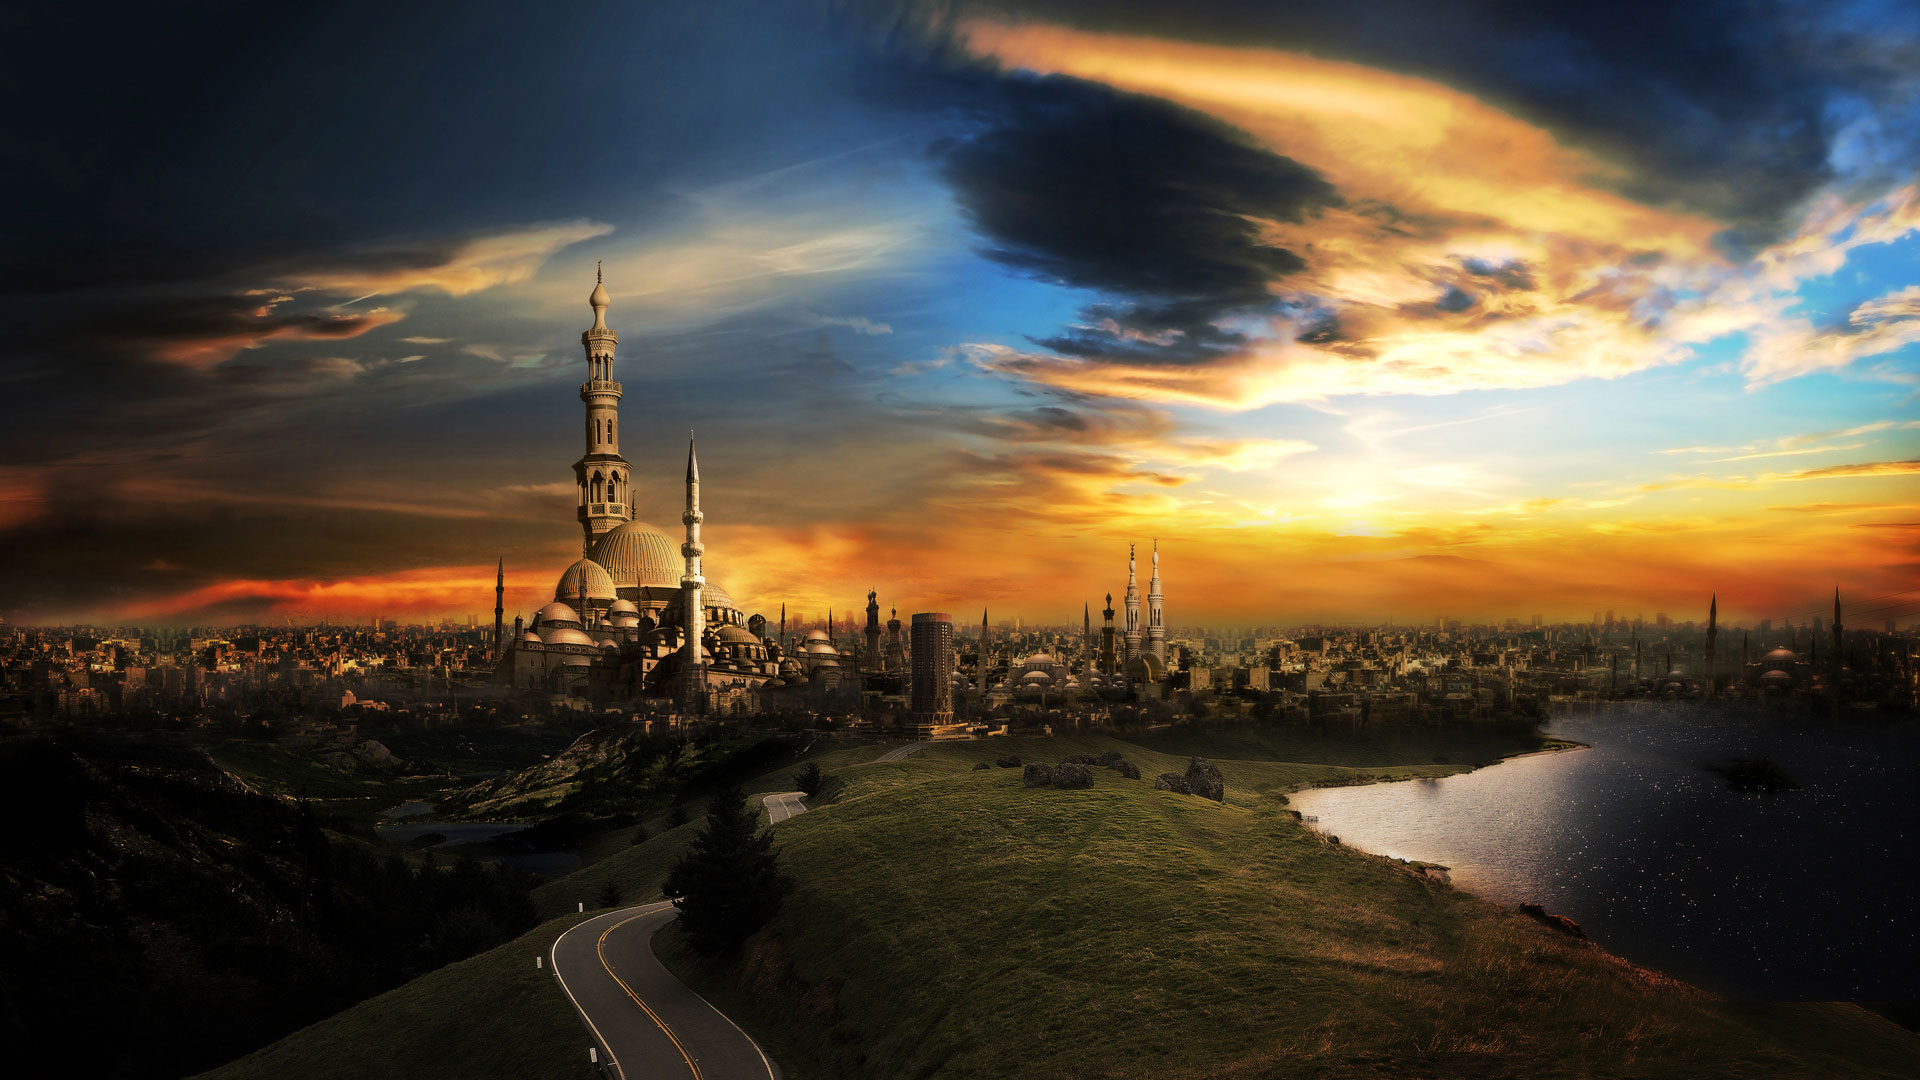 islam, road, landscape, lake, cgi, city, man made, cairo, sky, cloud, sunset mobile wallpaper